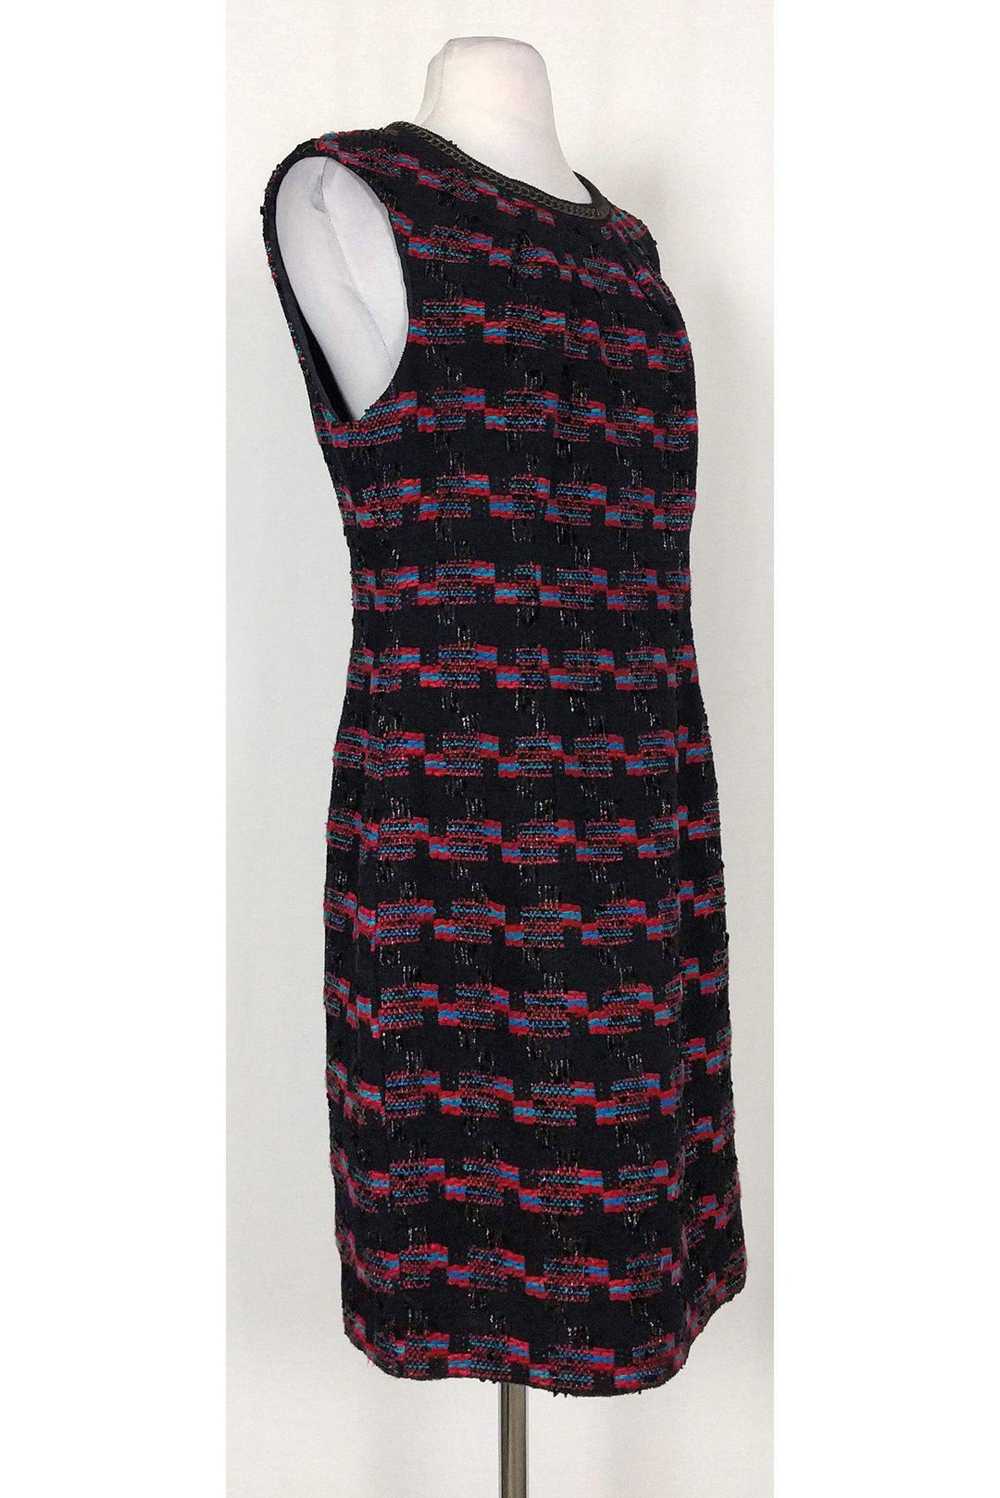 Trina Turk - Black, Red & Blue Tweed Dress Sz 10 - image 2